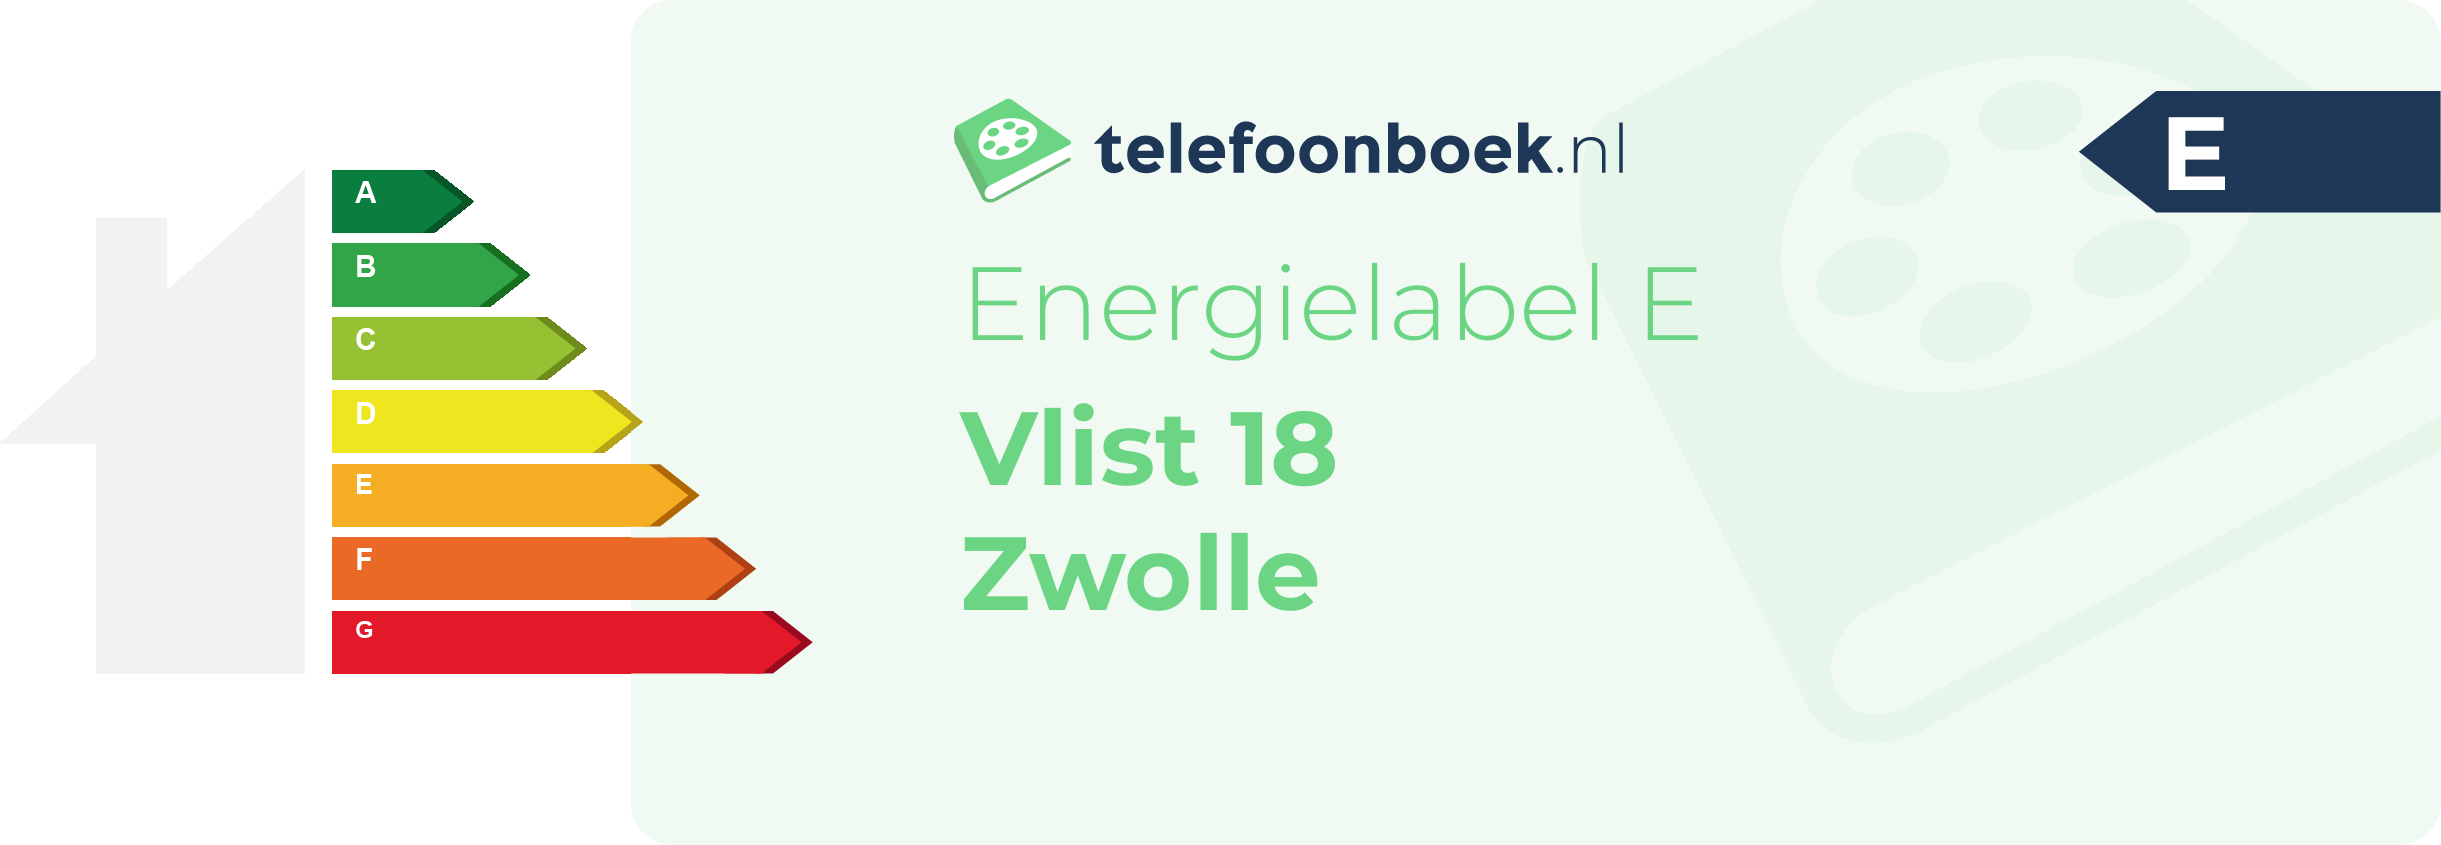 Energielabel Vlist 18 Zwolle